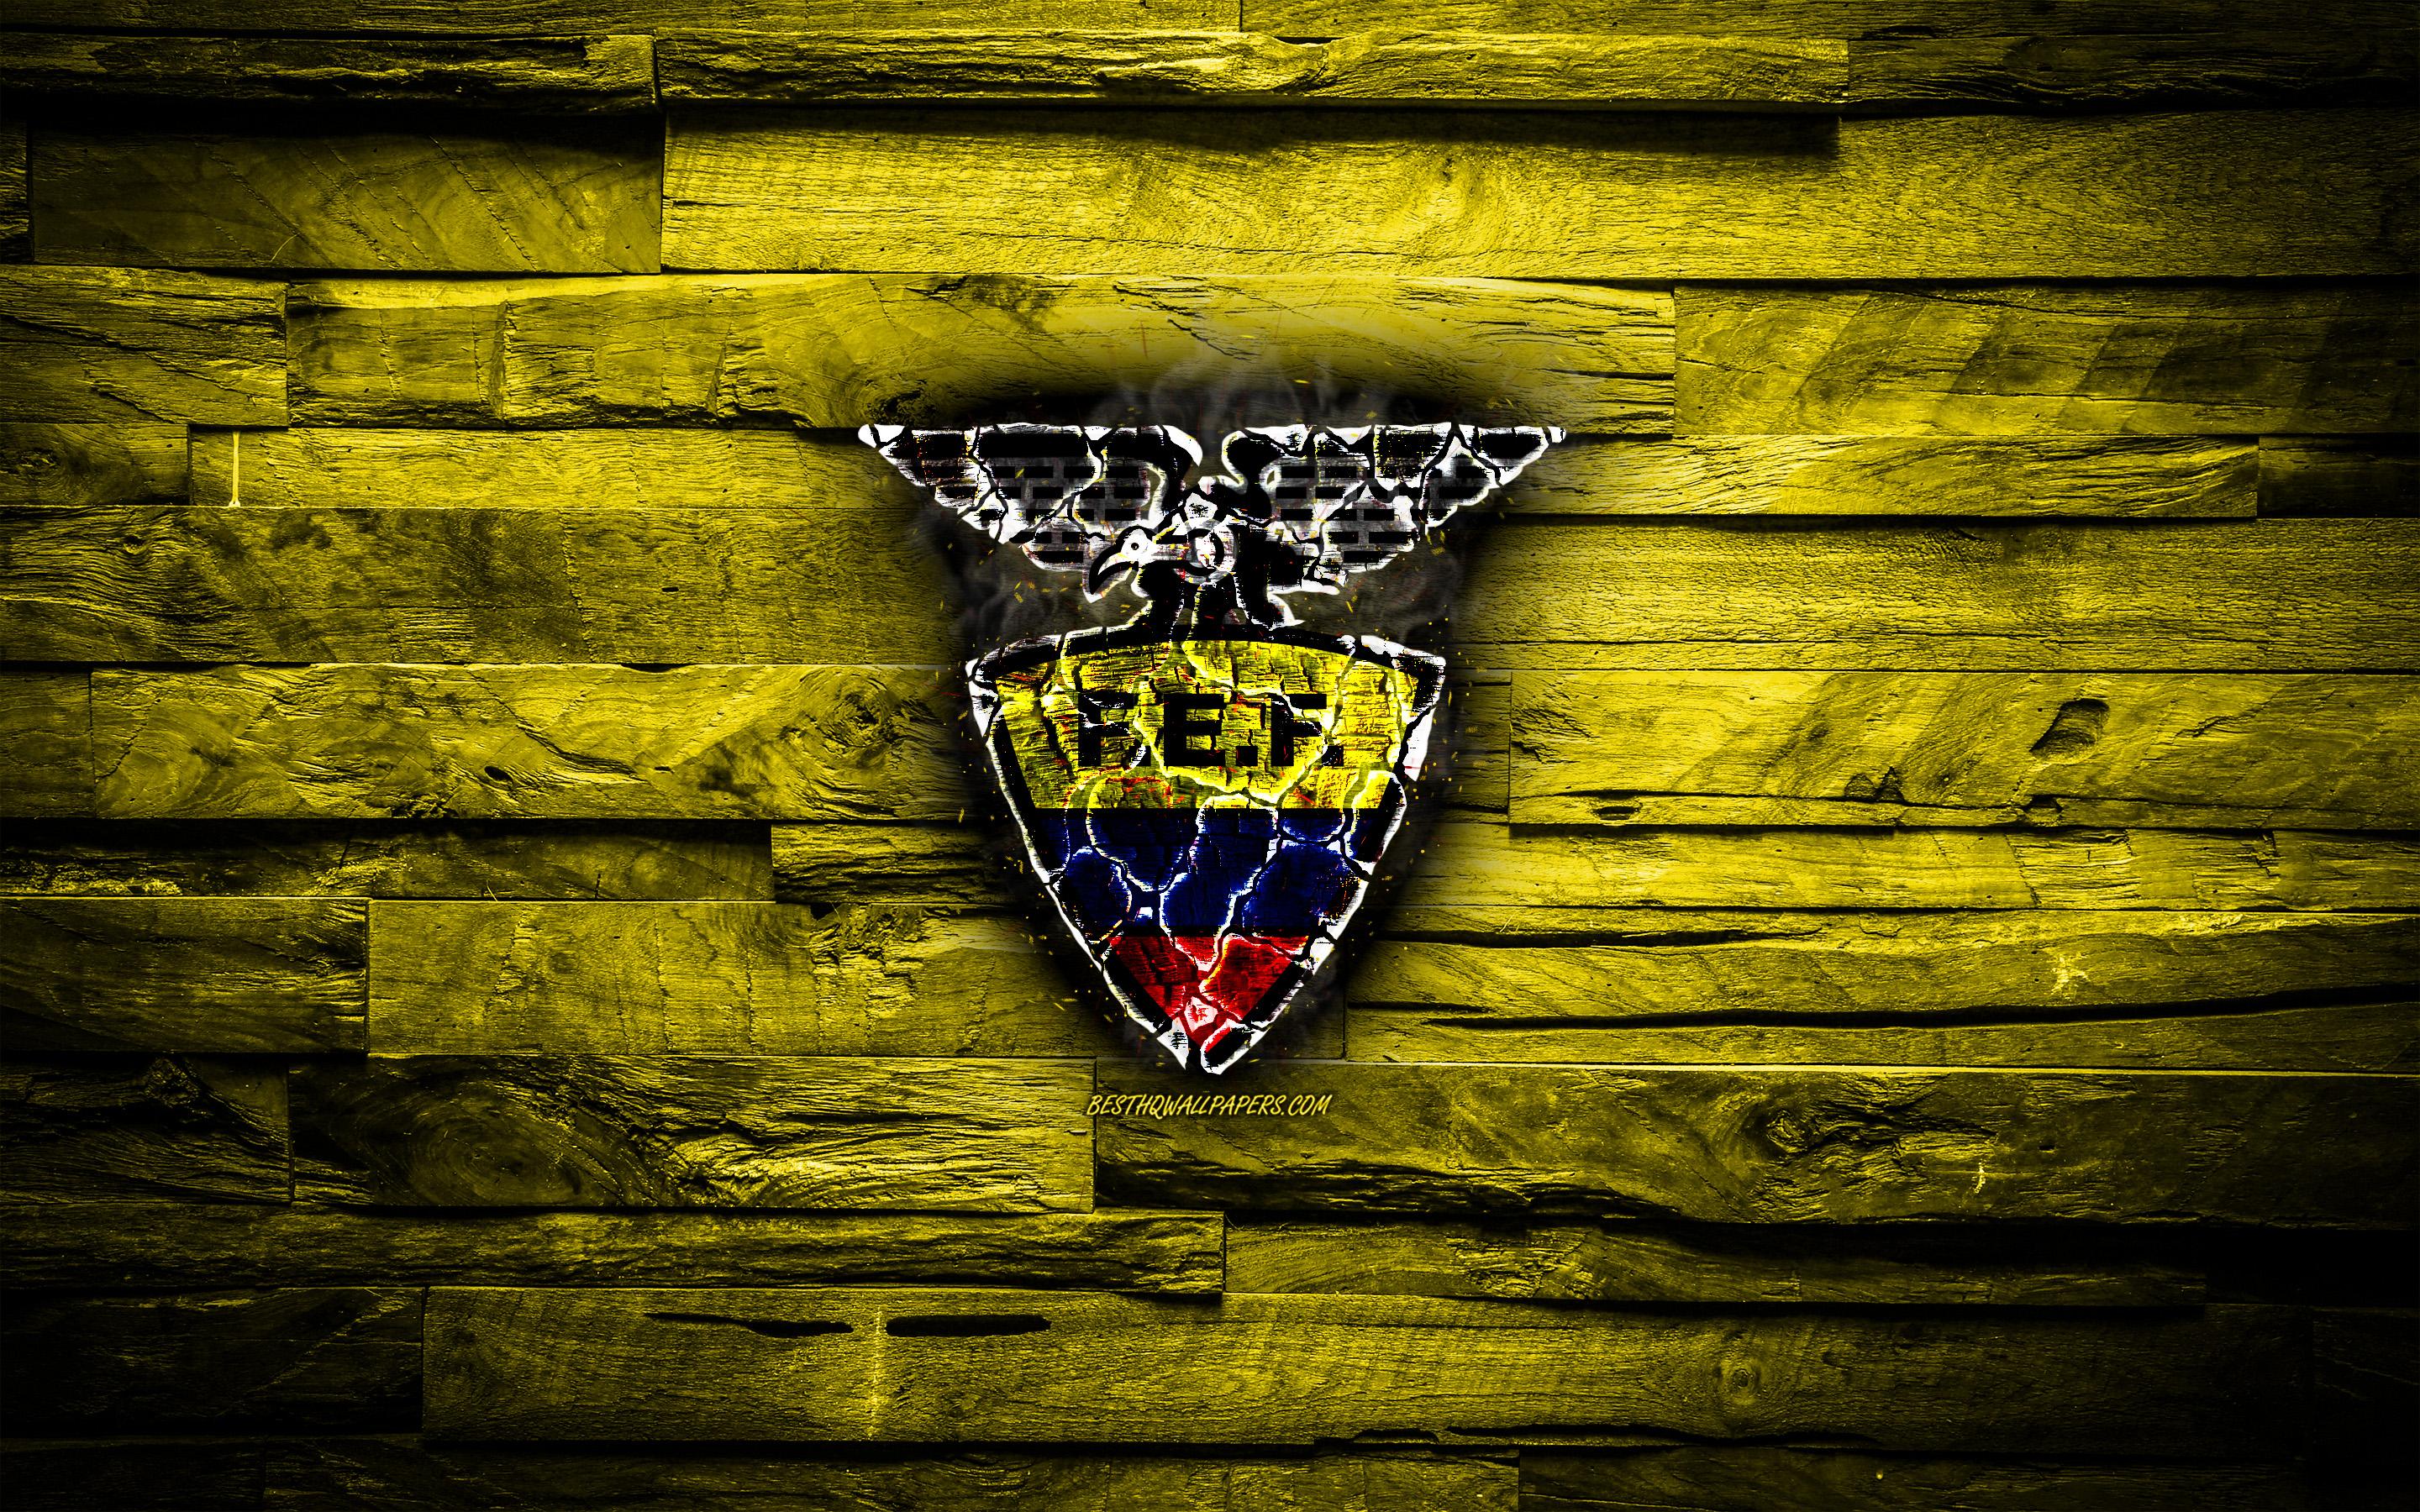 Download wallpaper Ecuador, burning logo, Conmebol, yellow